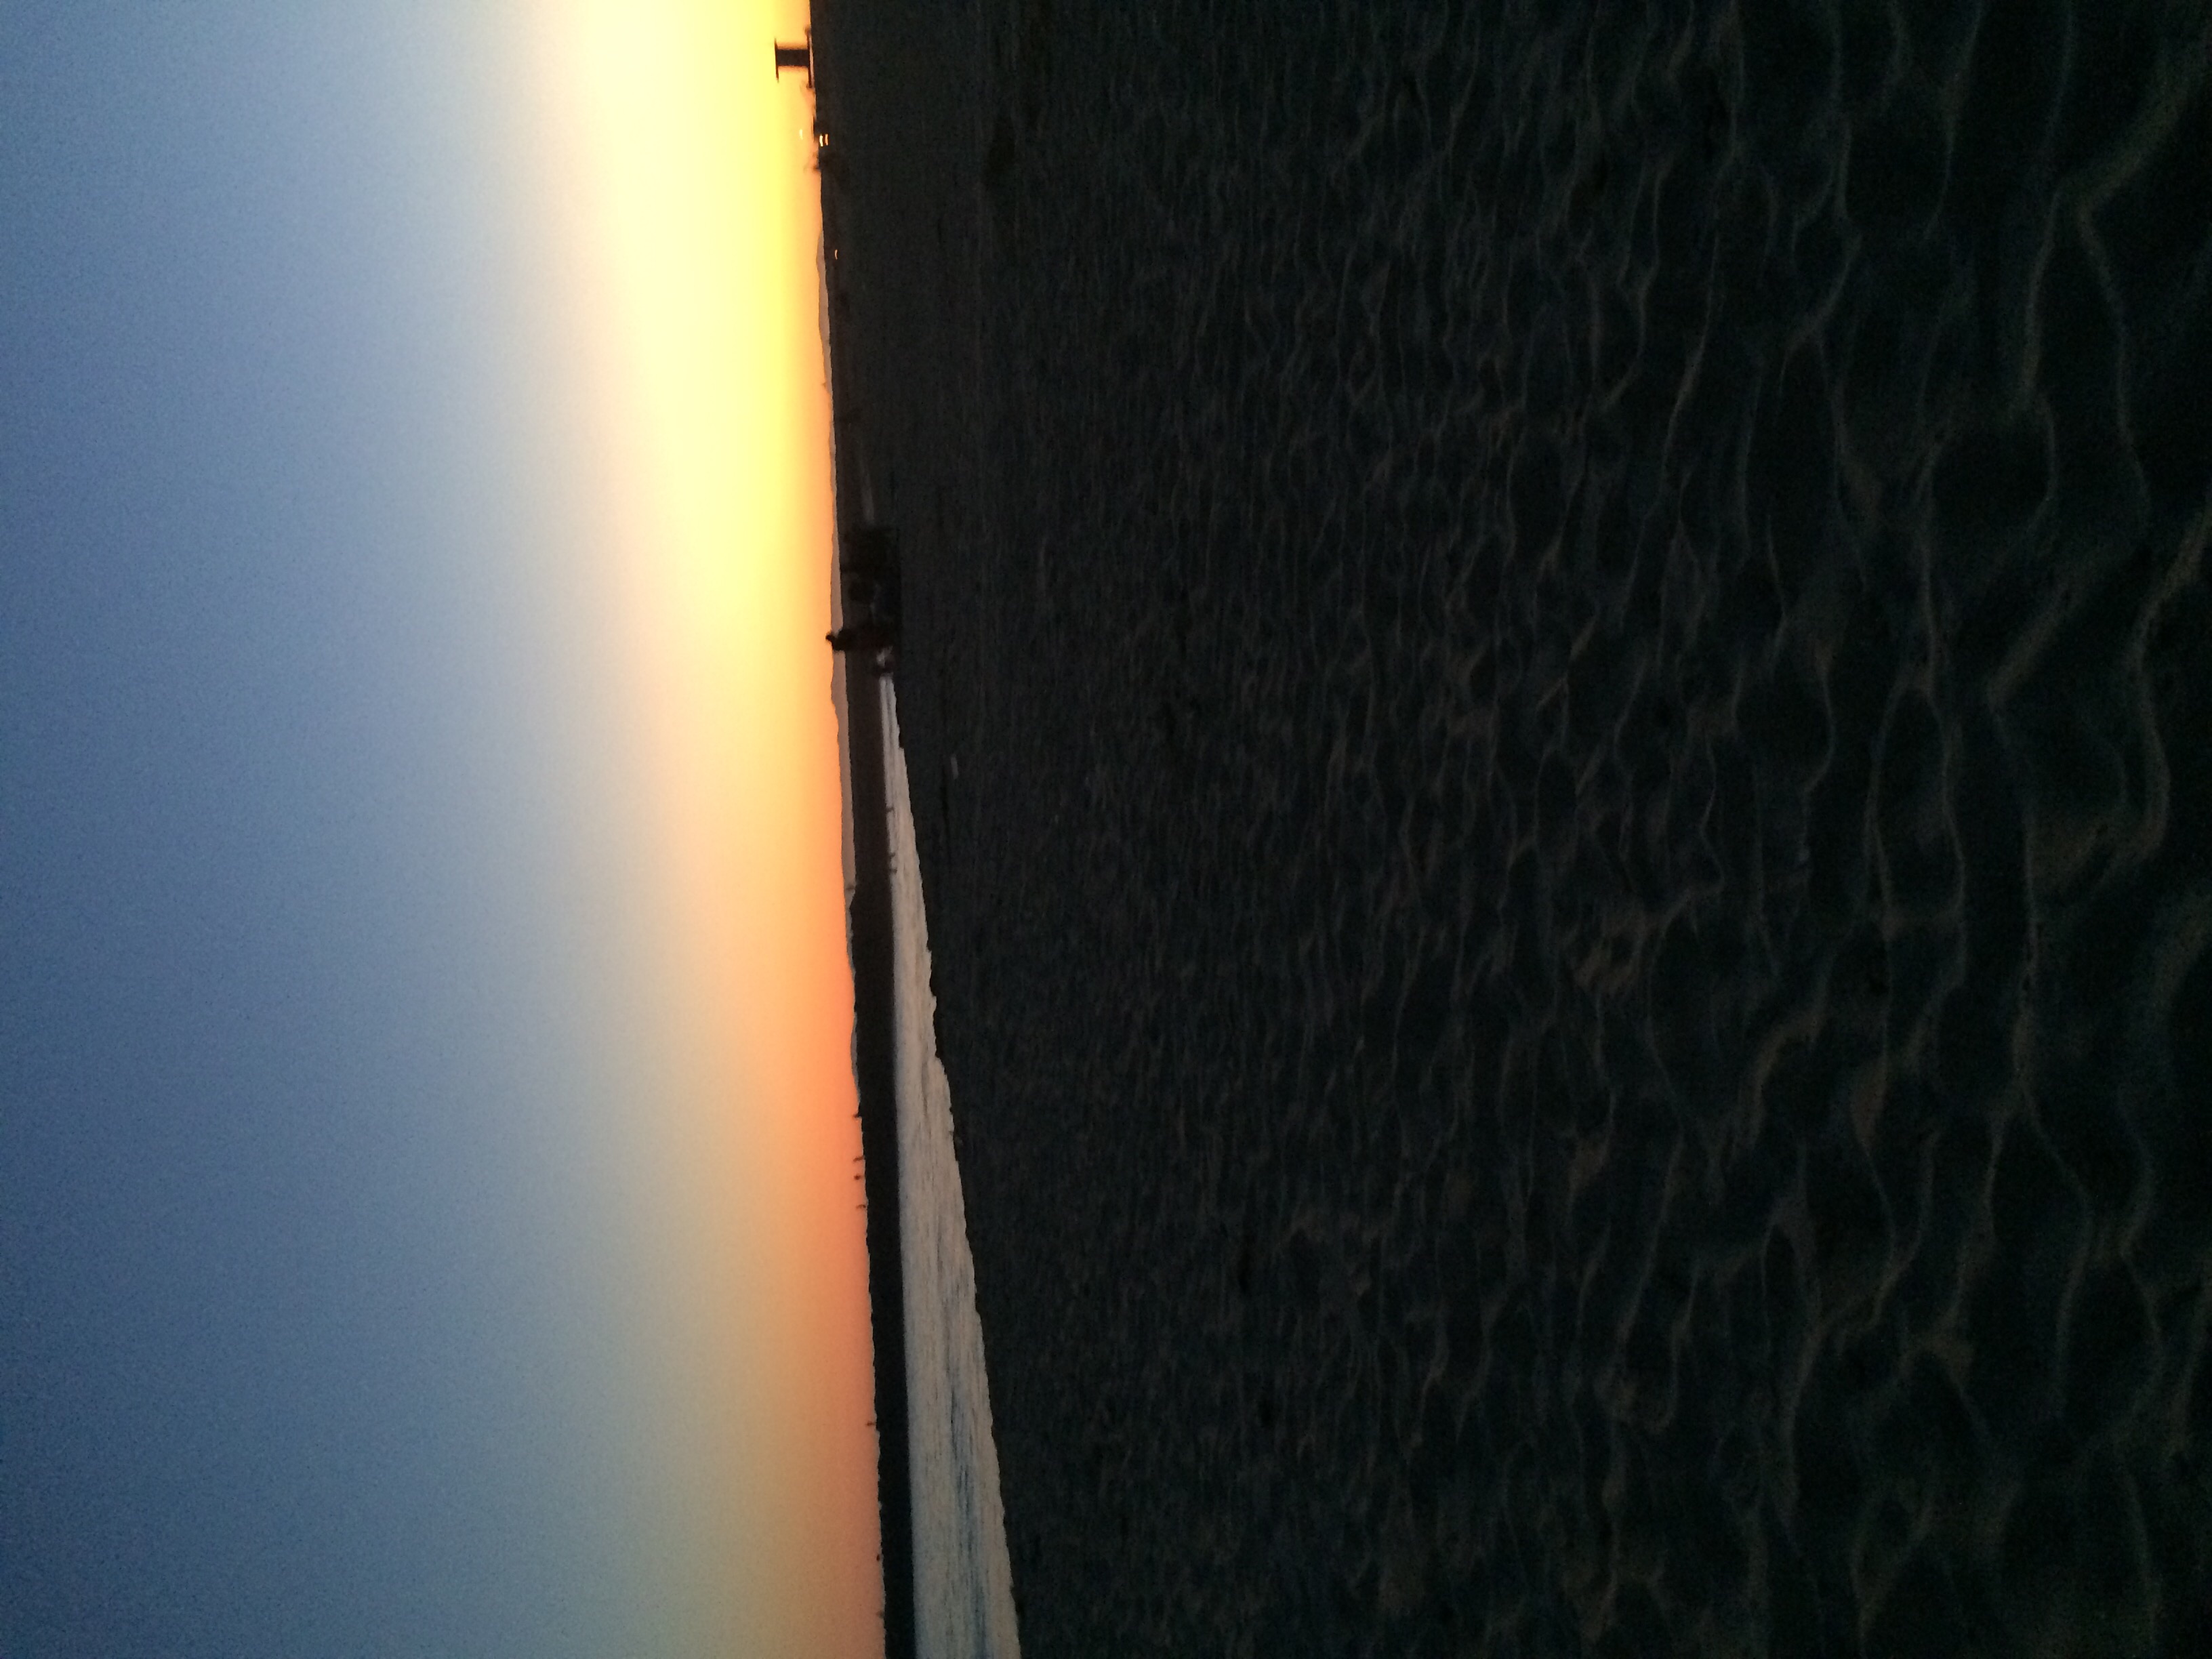  Sunset ساحل سمندر, بیچ